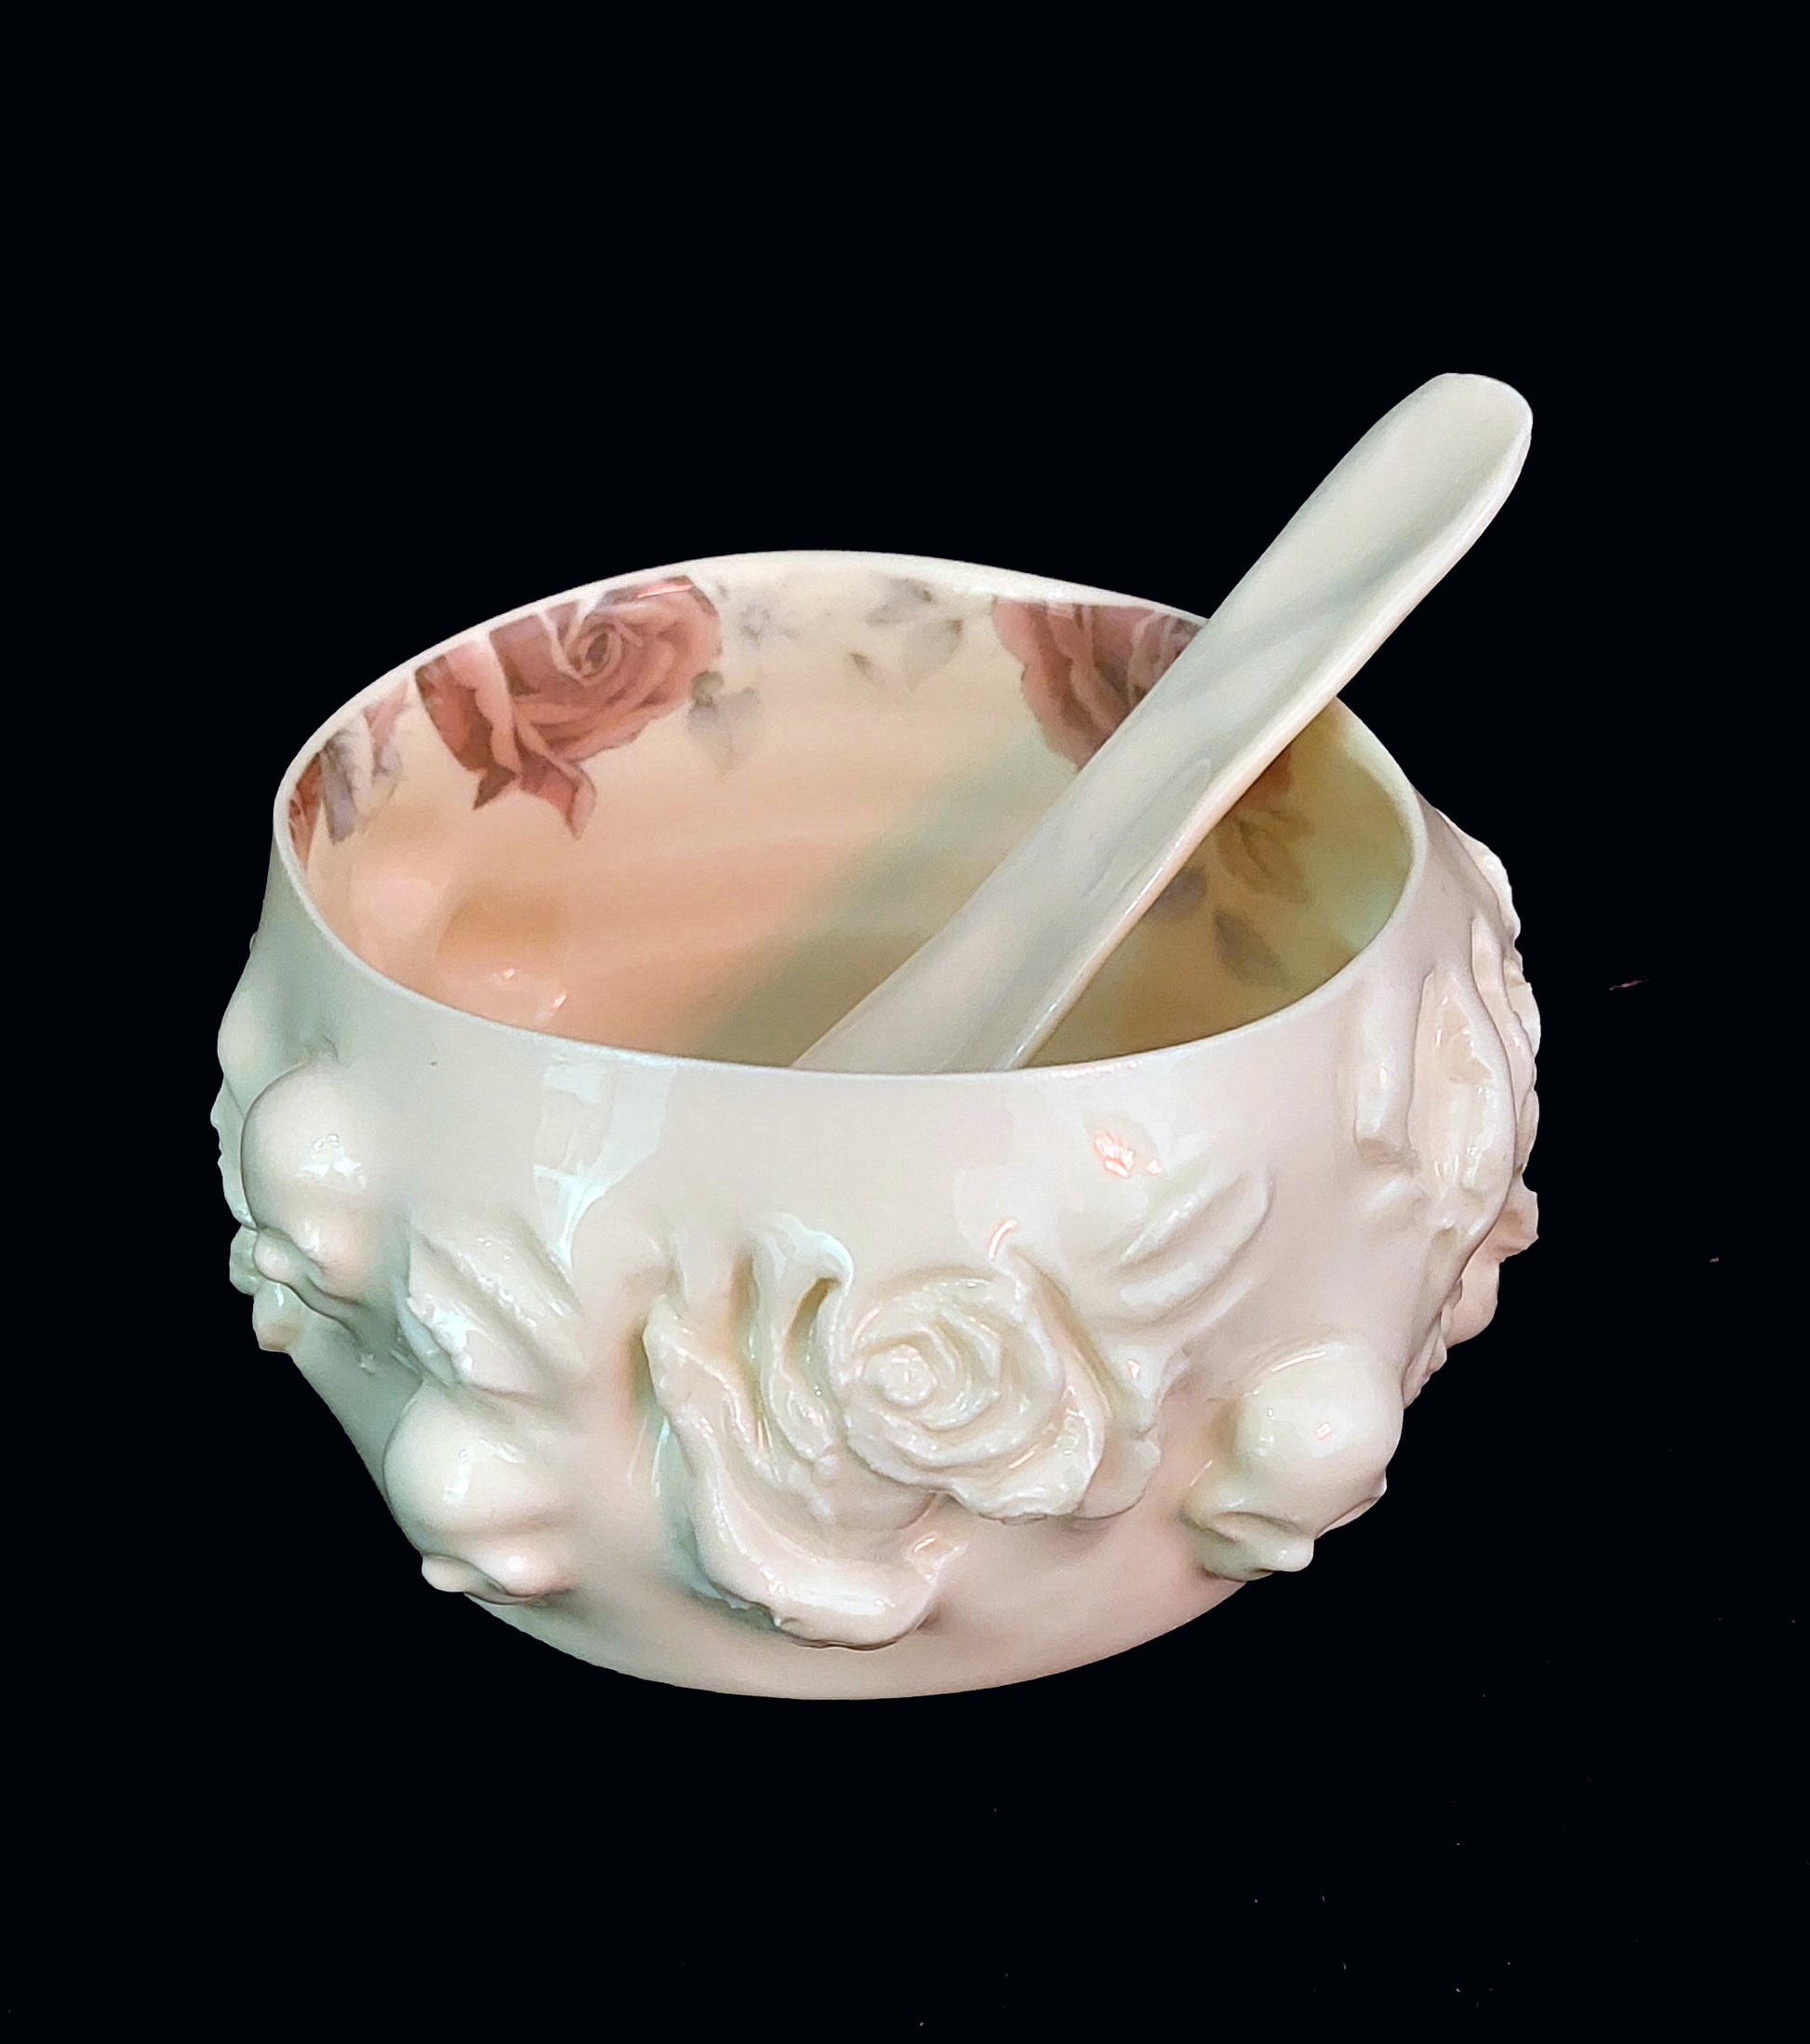 Anja-Lubach-Skull-Rose-Dish-Spoon